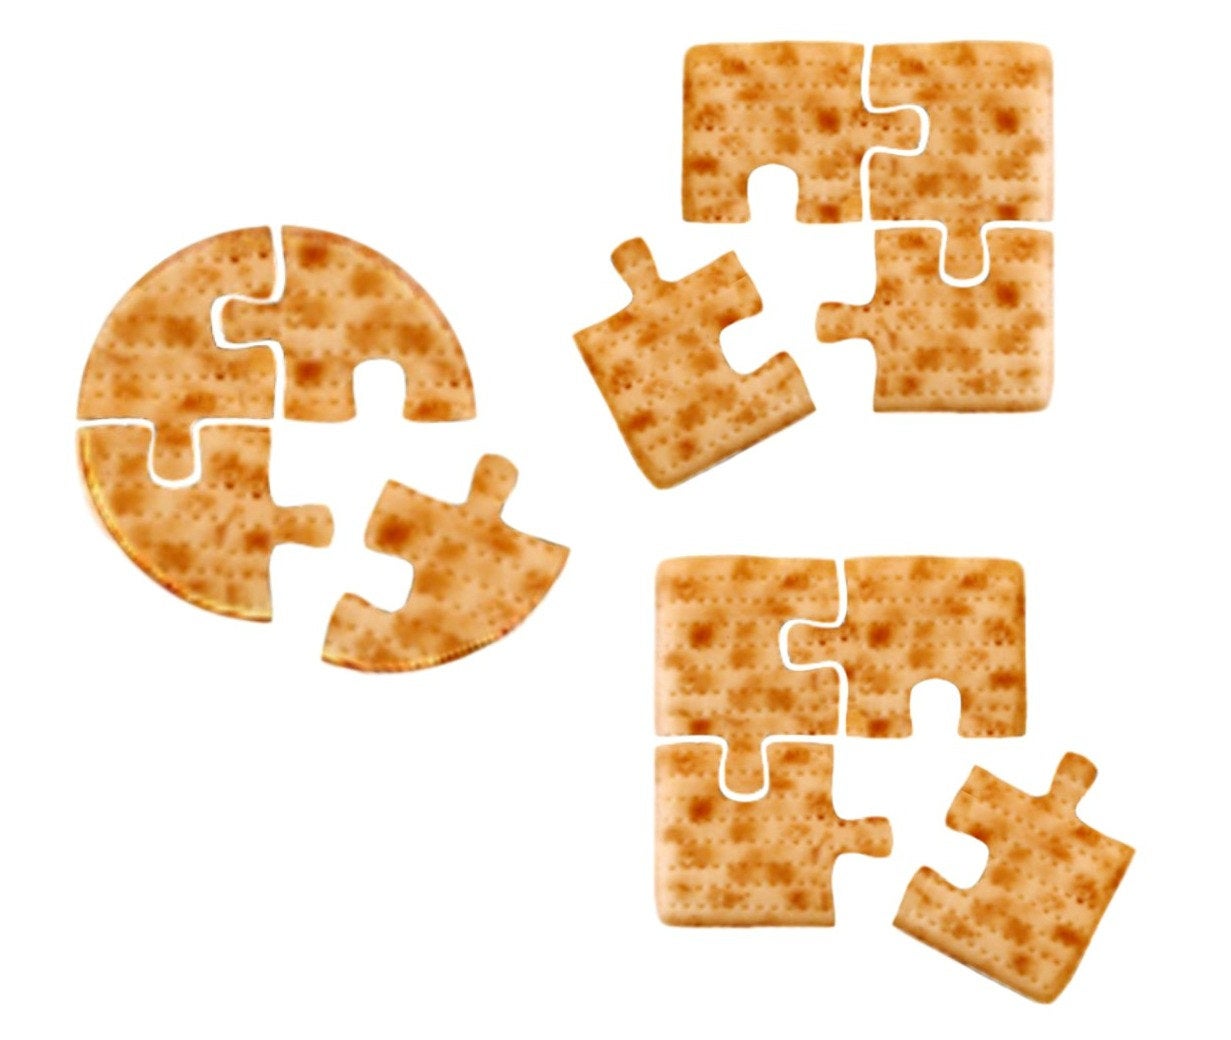 Passover Seder matzah puzzle marzipan candy tile treats